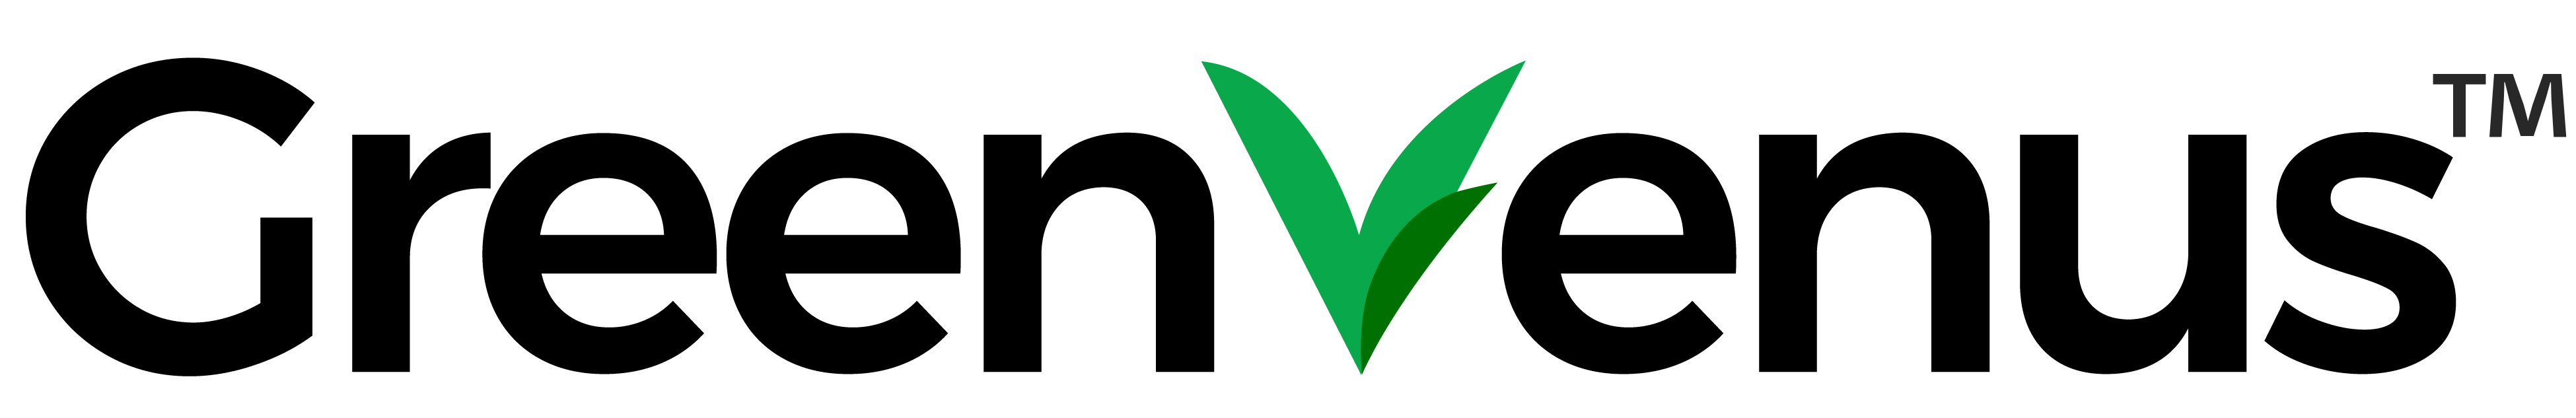 https://www.greenvenus.com/wp-content/uploads/2021/08/cropped-logo_GreenVenusTM.png